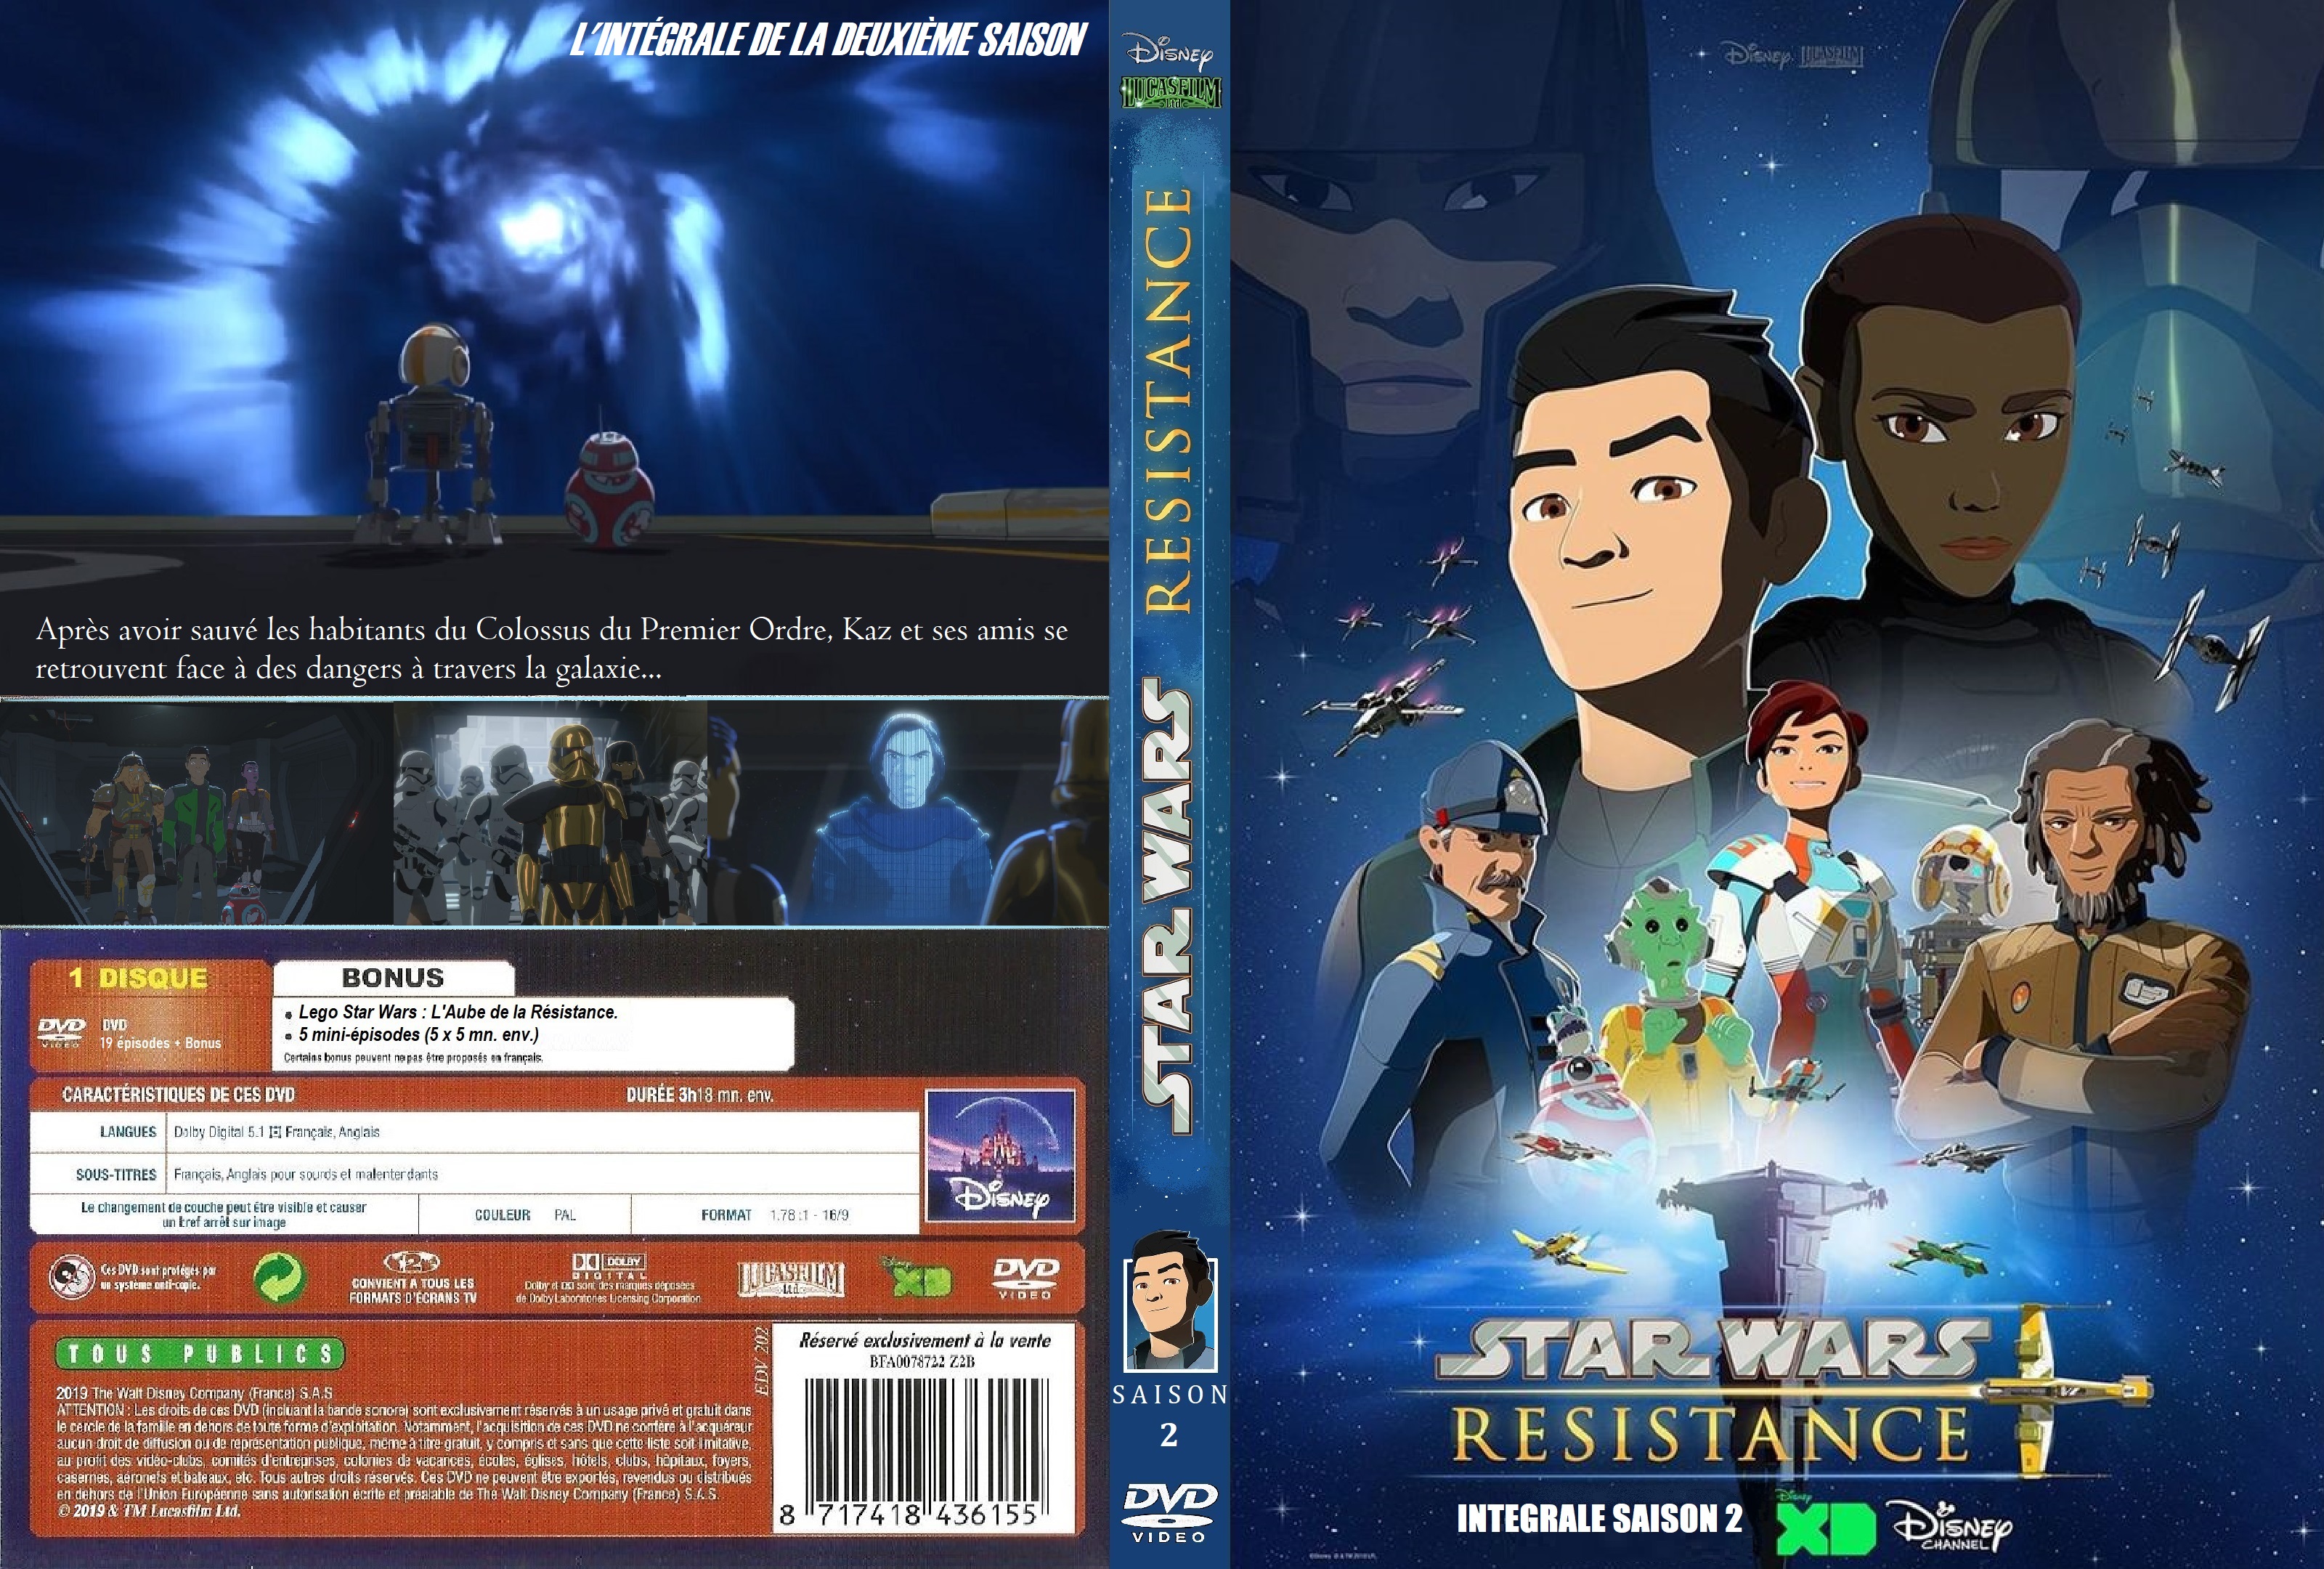 Jaquette DVD Star Wars Resistance saison 2 custom